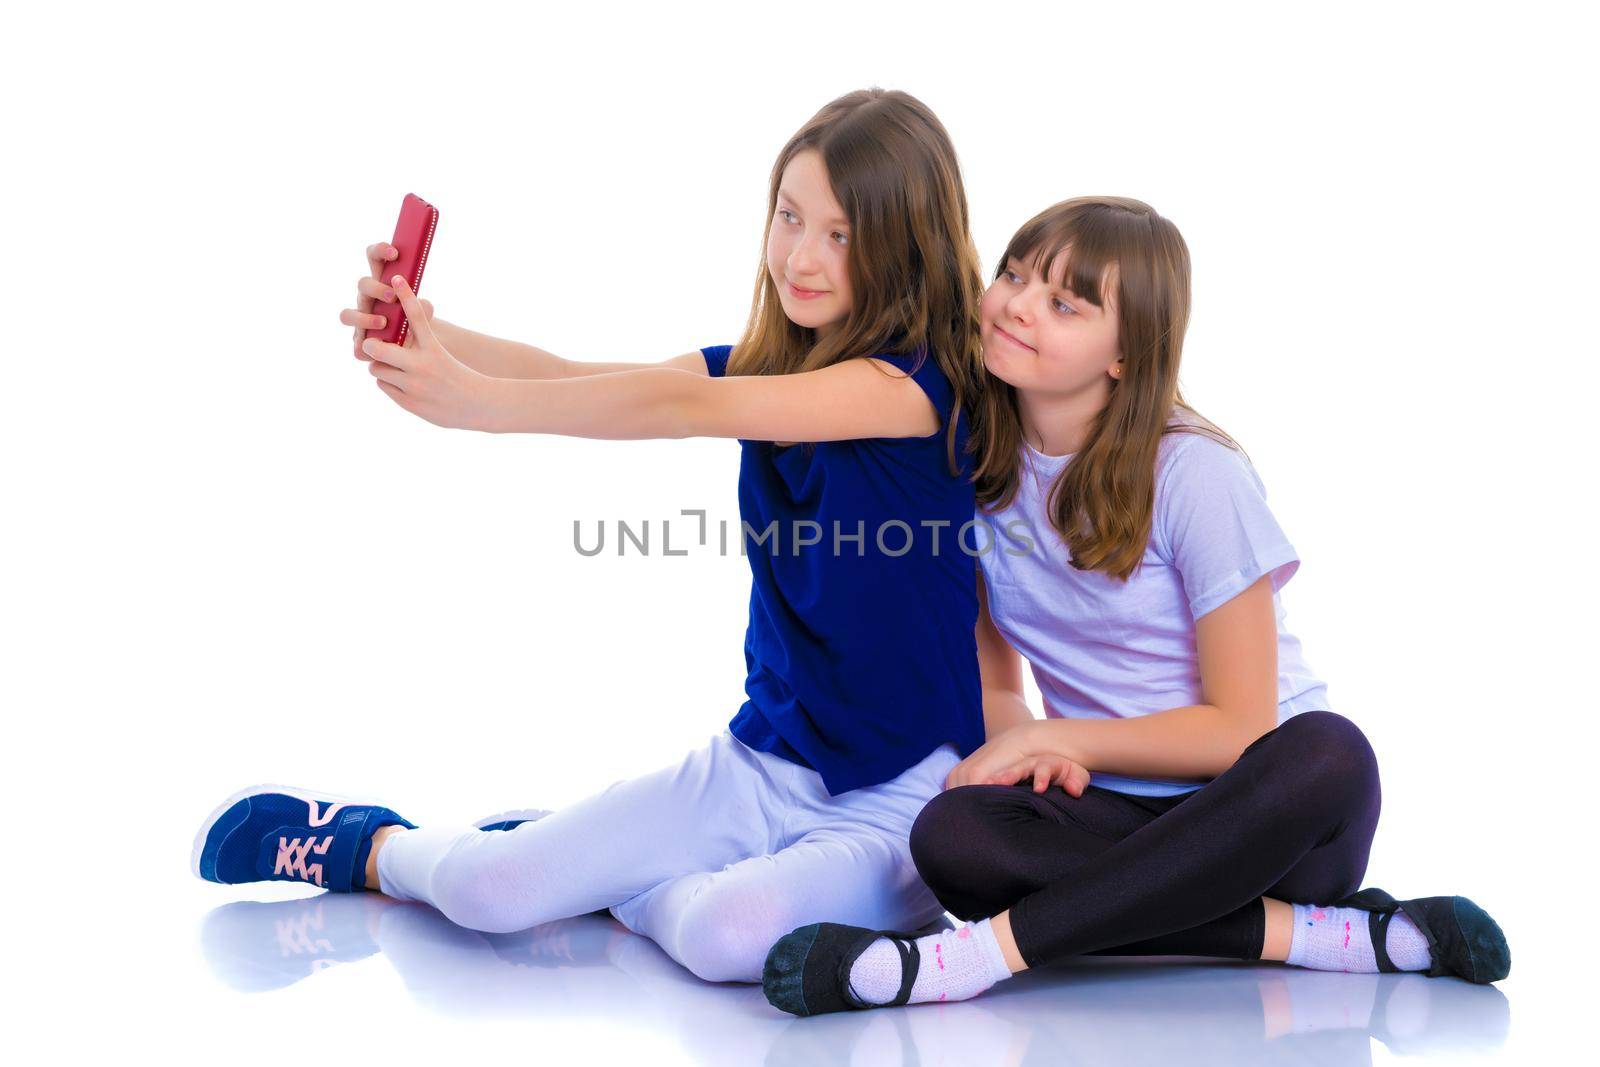 Two girls make a self-portrait on a smartphone. by kolesnikov_studio